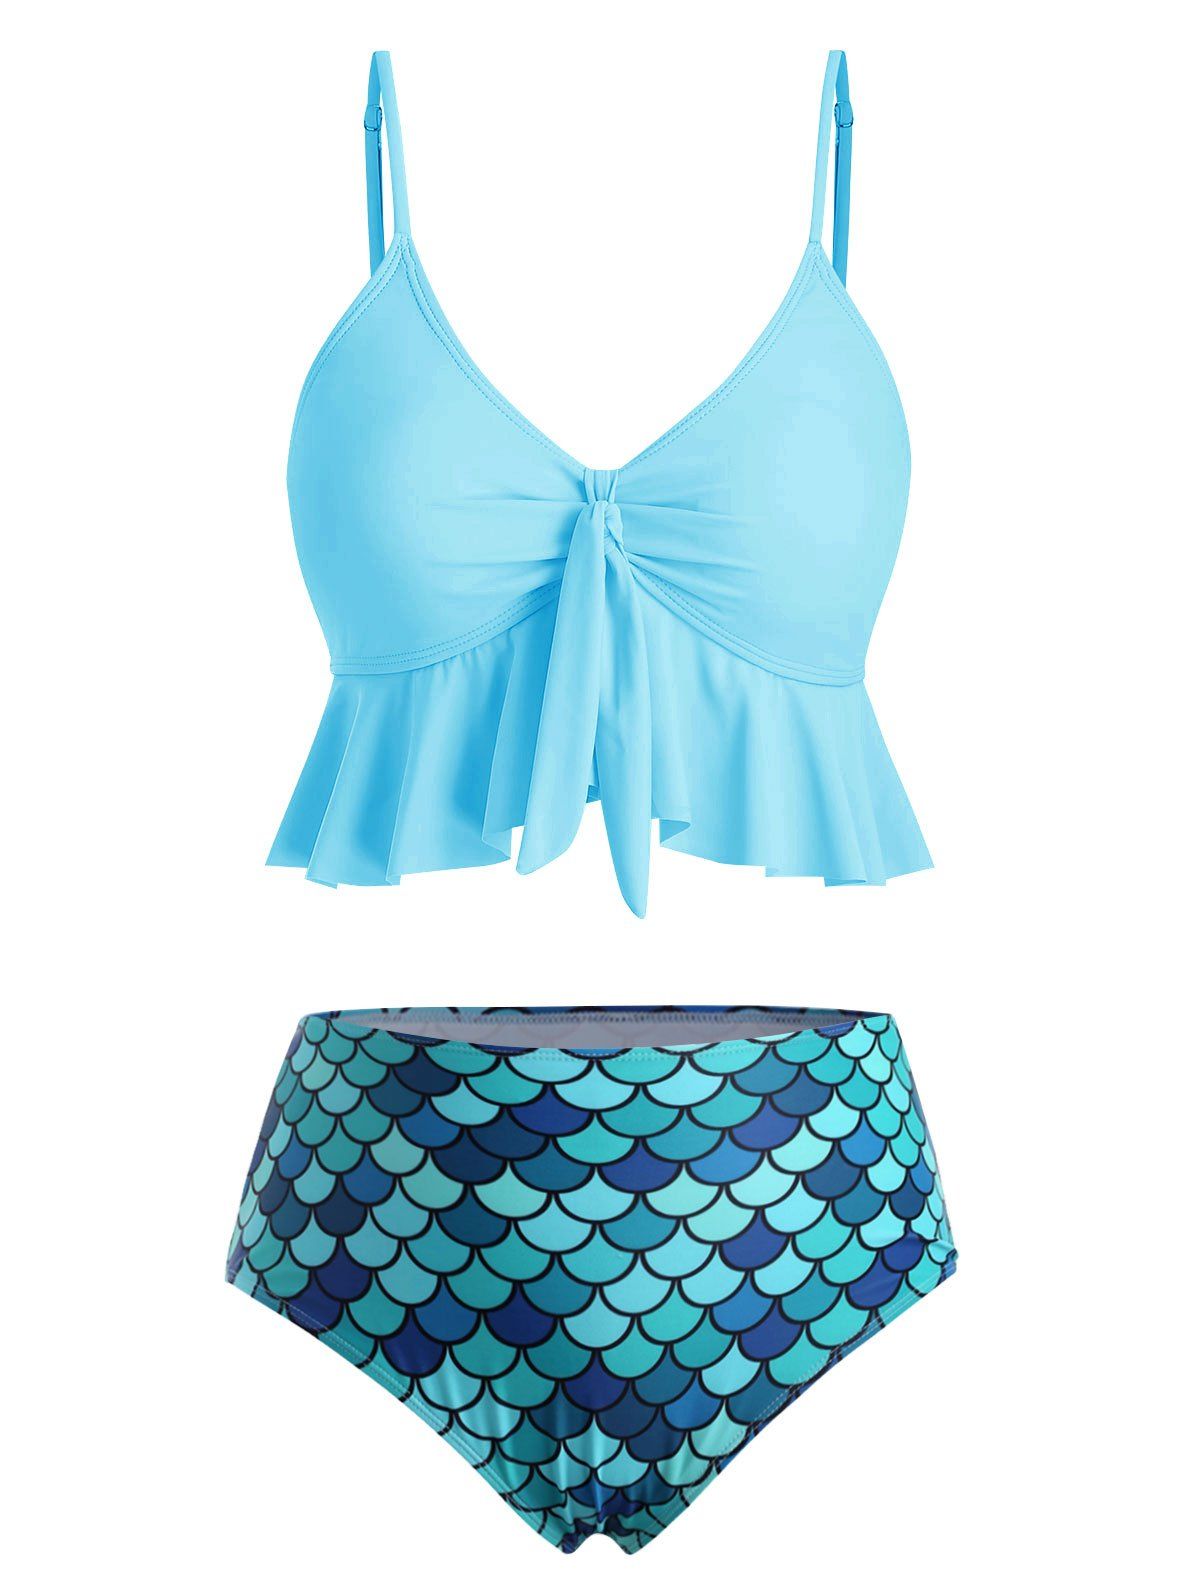 Beach Tankini Swimsuit Mermaid Scale Print Swimwear Flounce Knot High Waist Tummy Control Bathing Suit - BLUE ZIRCON XL